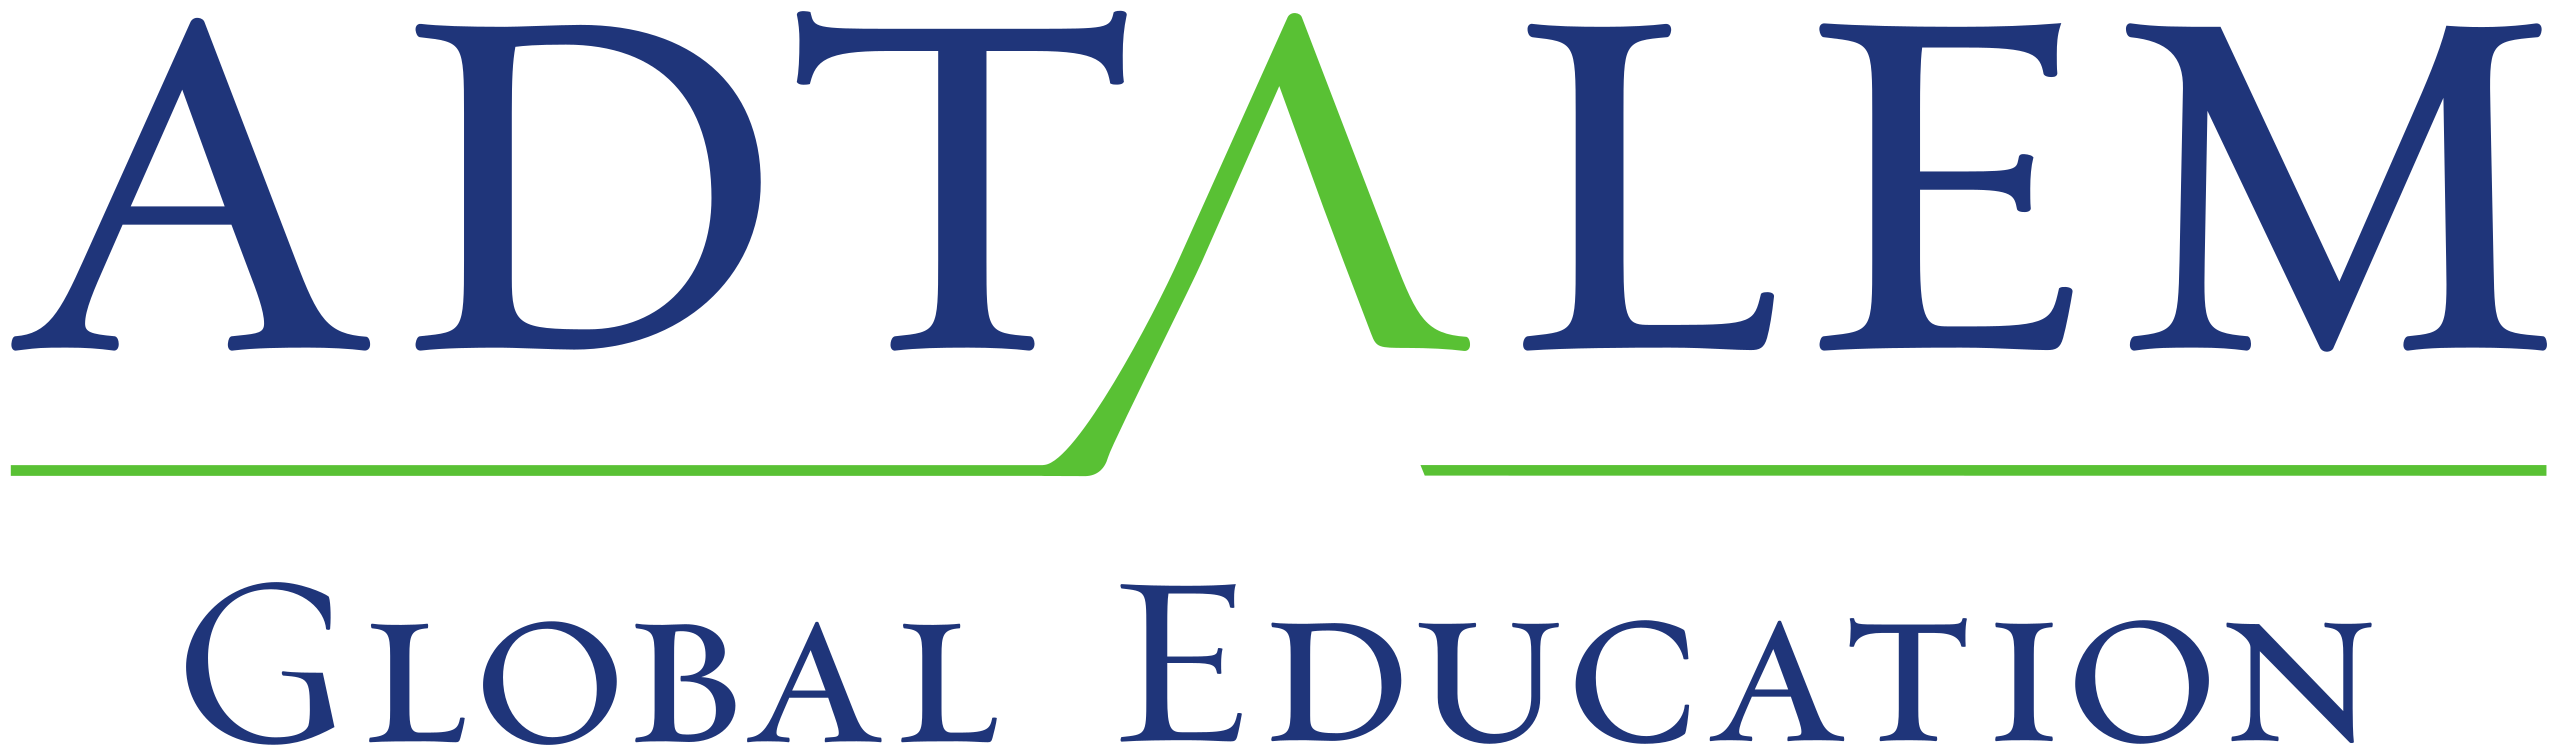 Adtalem Global Education Inc. (fka DeVry University)